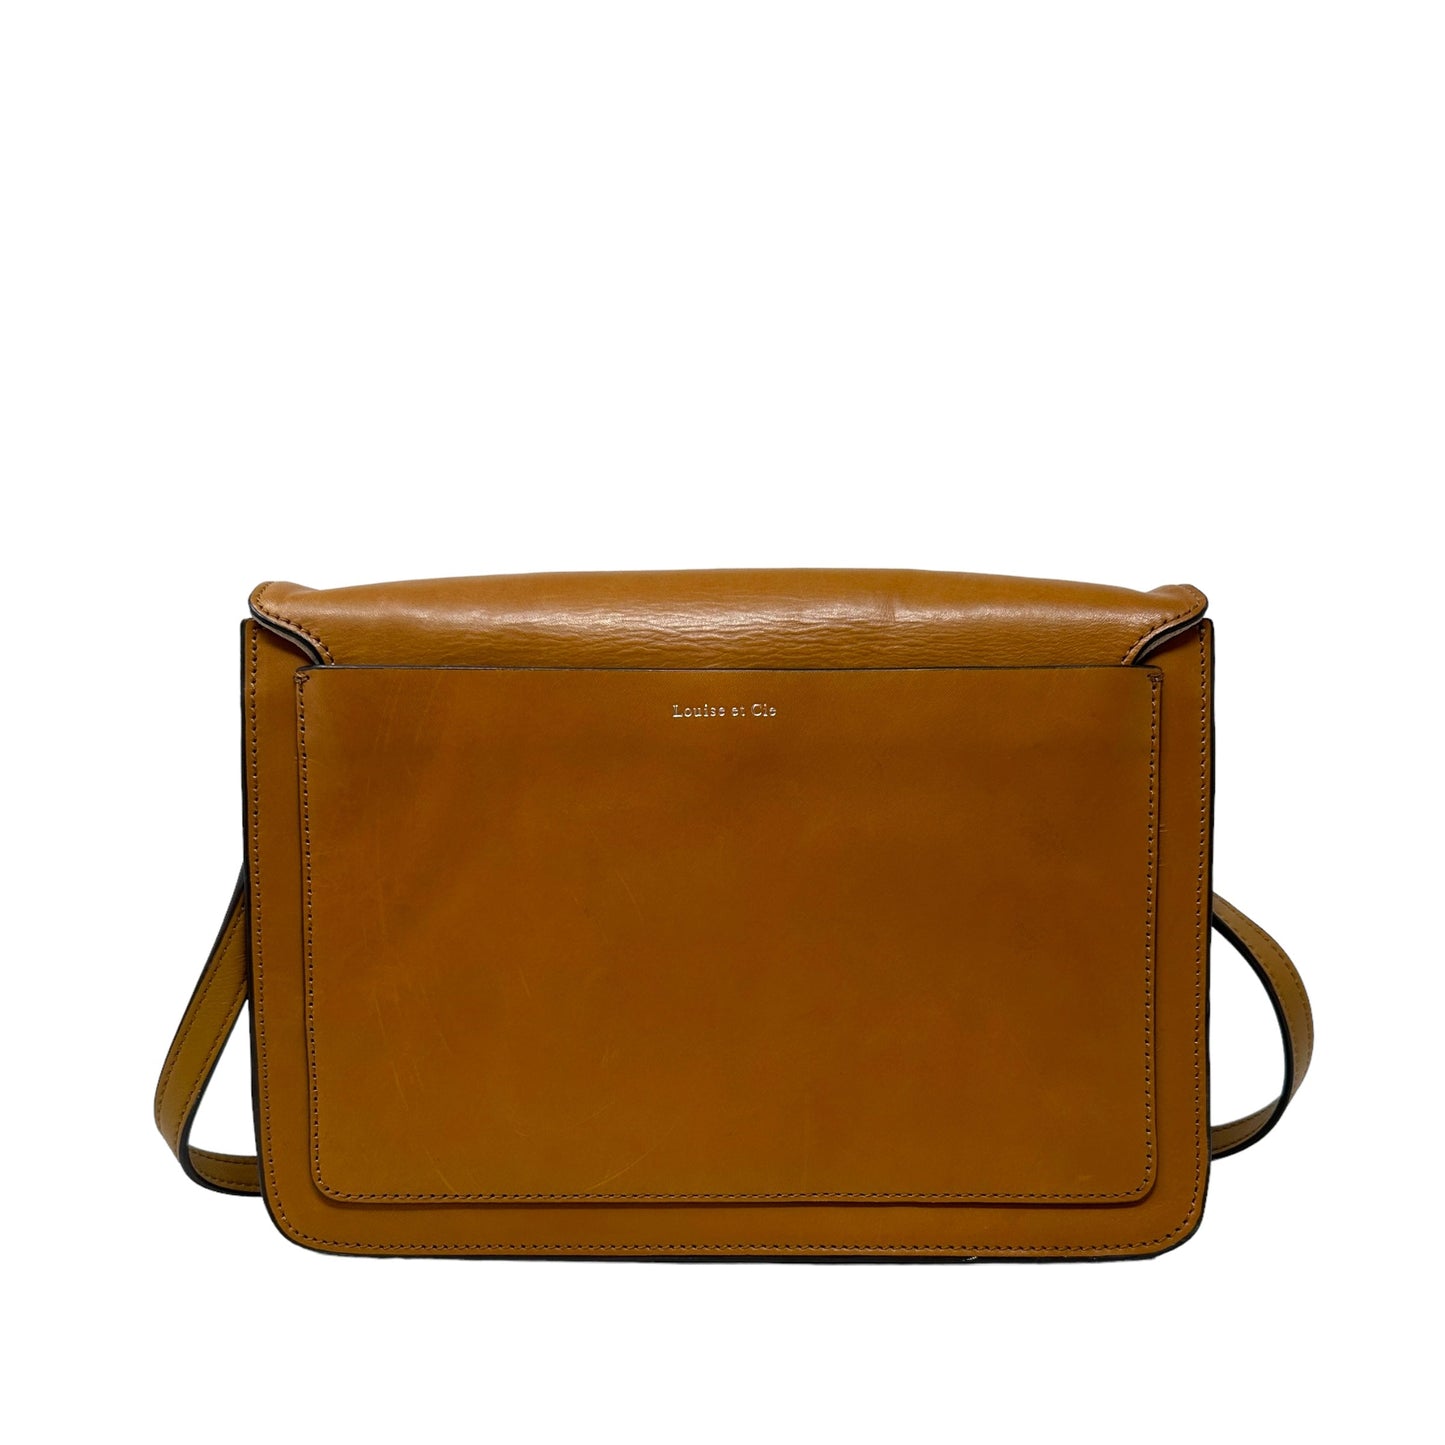 Handbag Designer By Louise Et Cie  Size: Medium